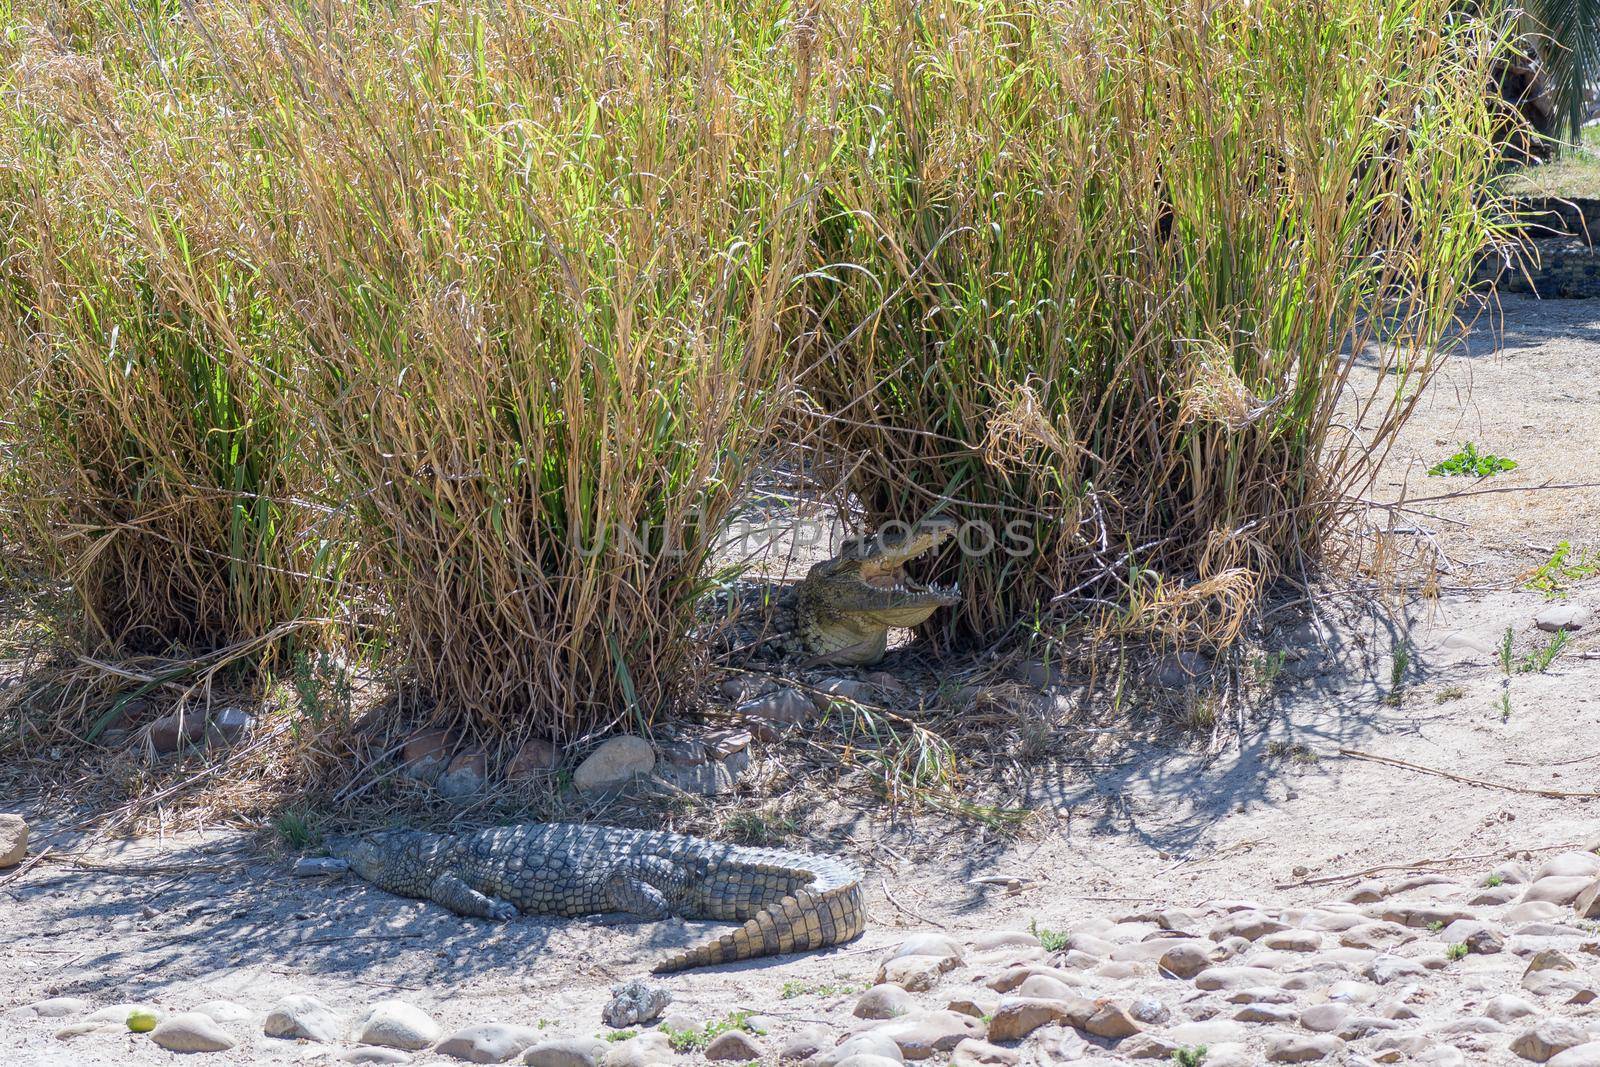 A nile crocodile, Crocodylus niloticus, on sand between reeds